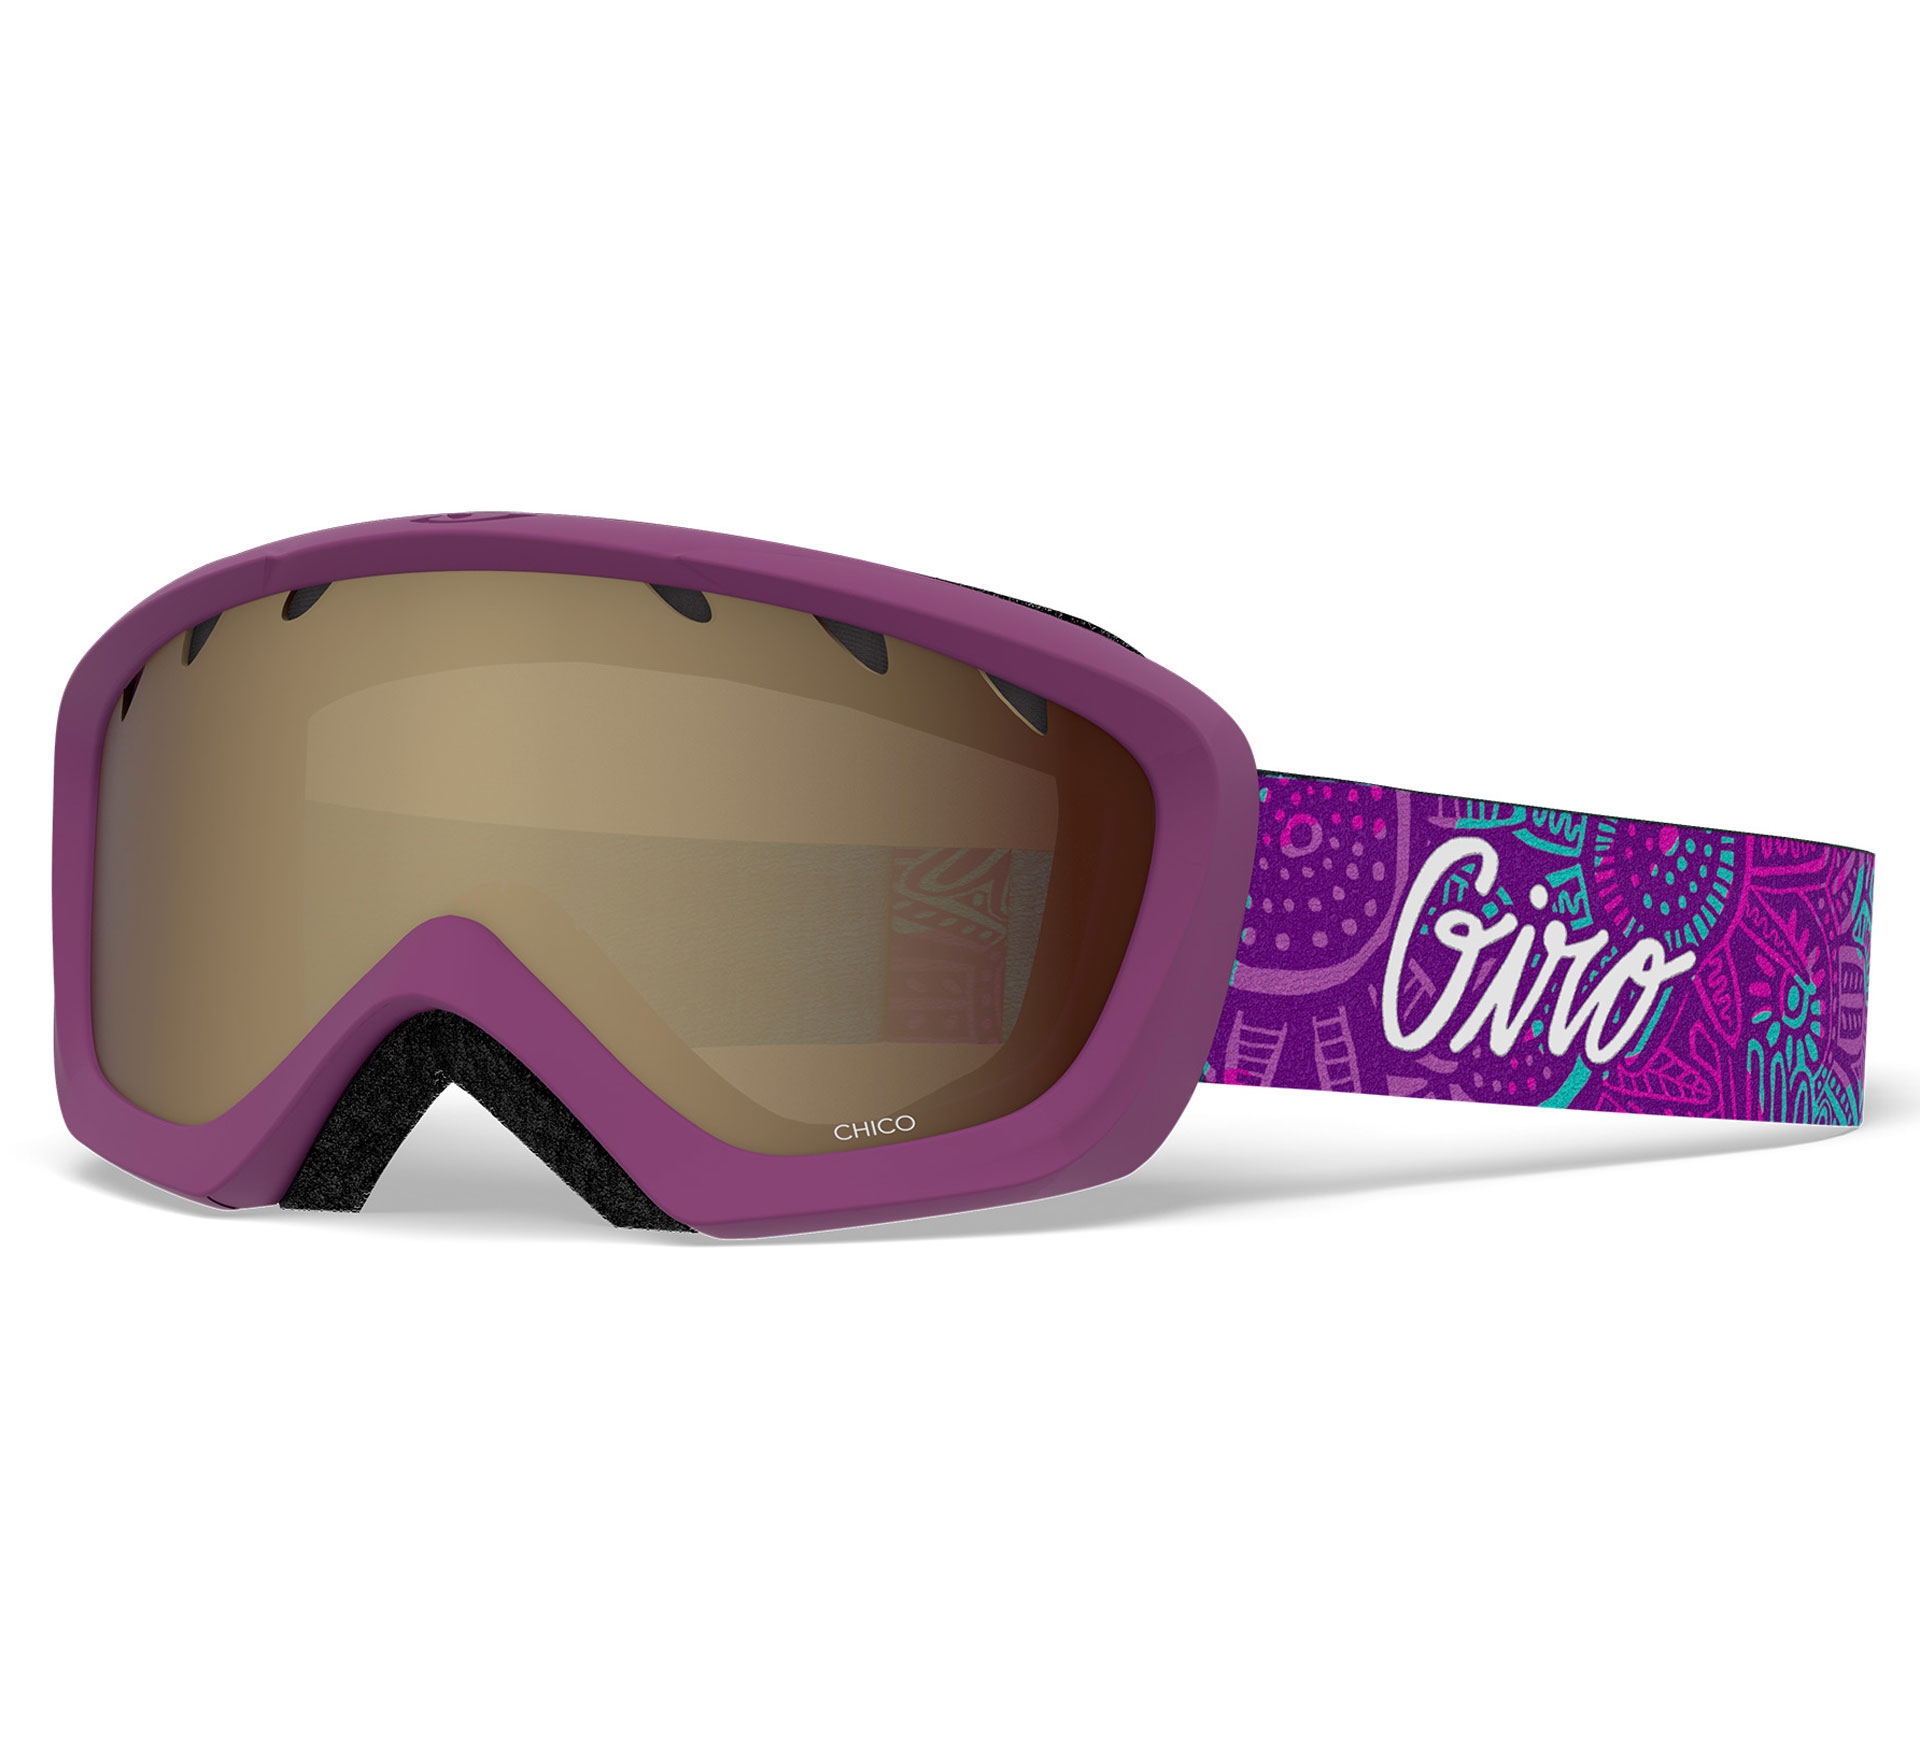 Giro Chico Ski, Lunettes de ski pour enfants